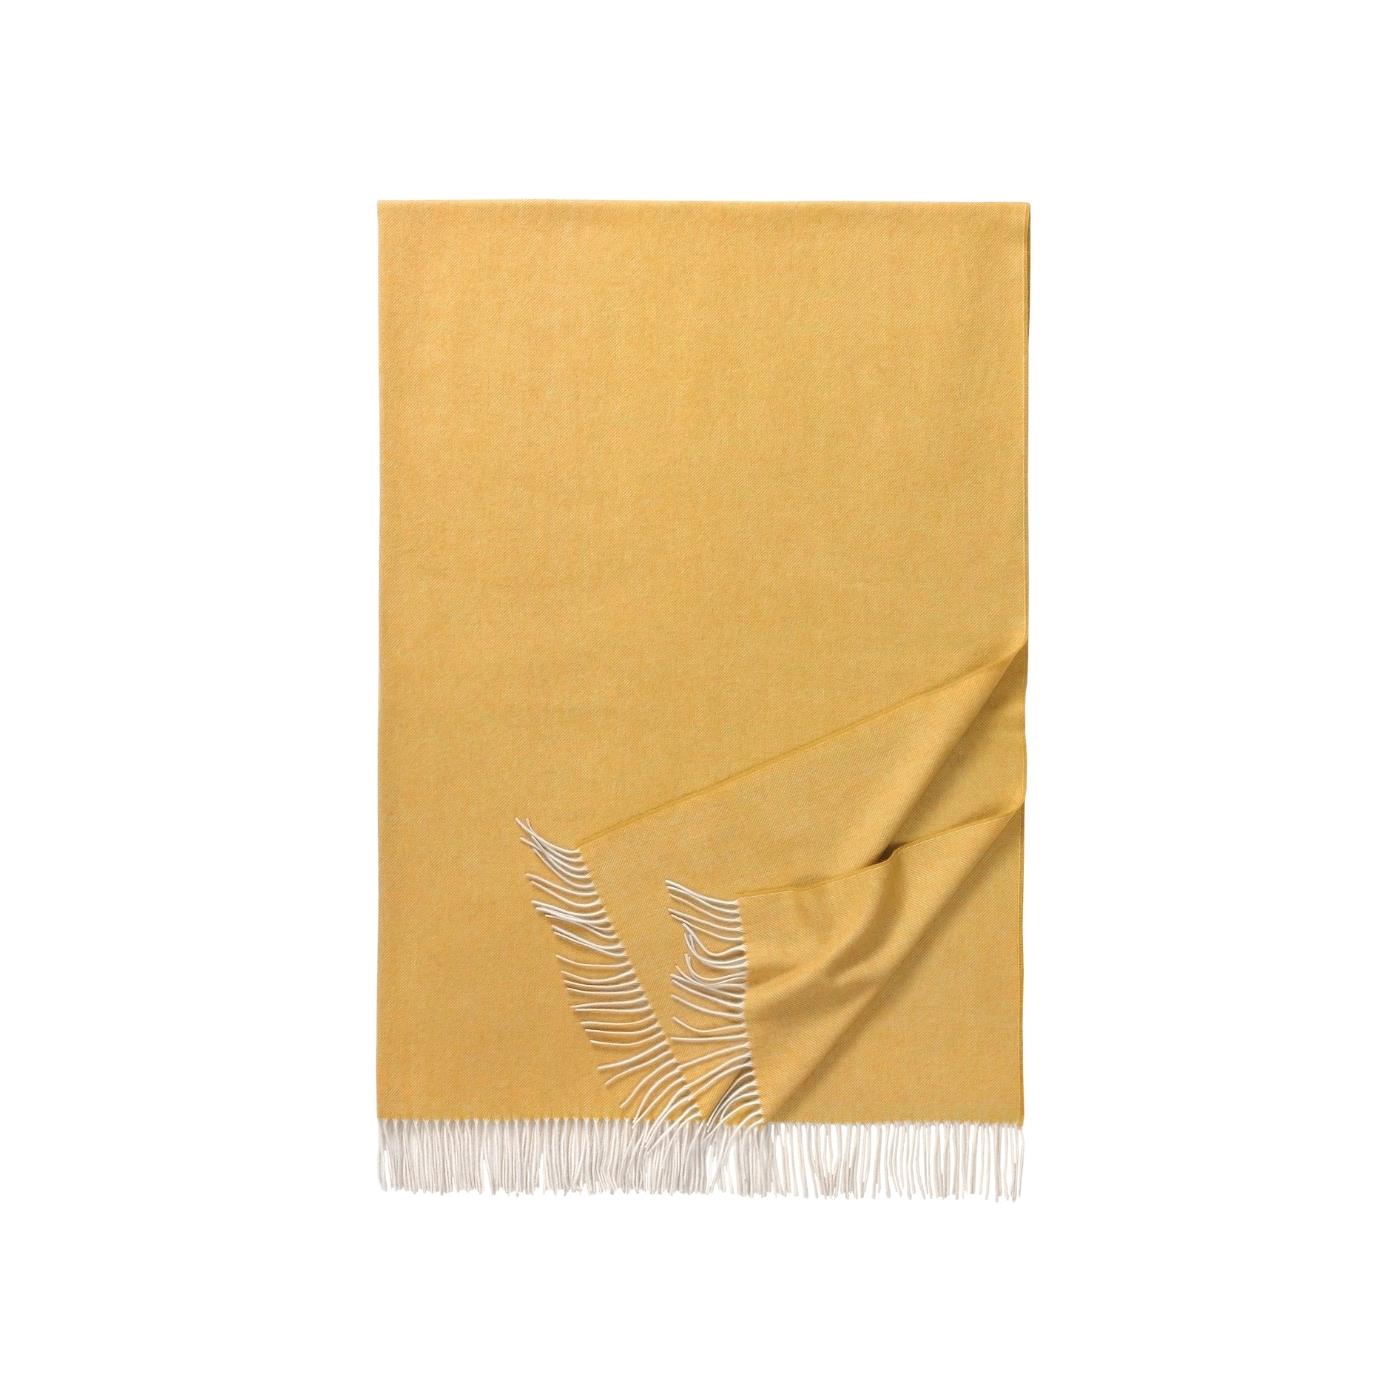 Eagle Products Plaid aus 100% Schurwolle in gelb, 130 x 200 cm